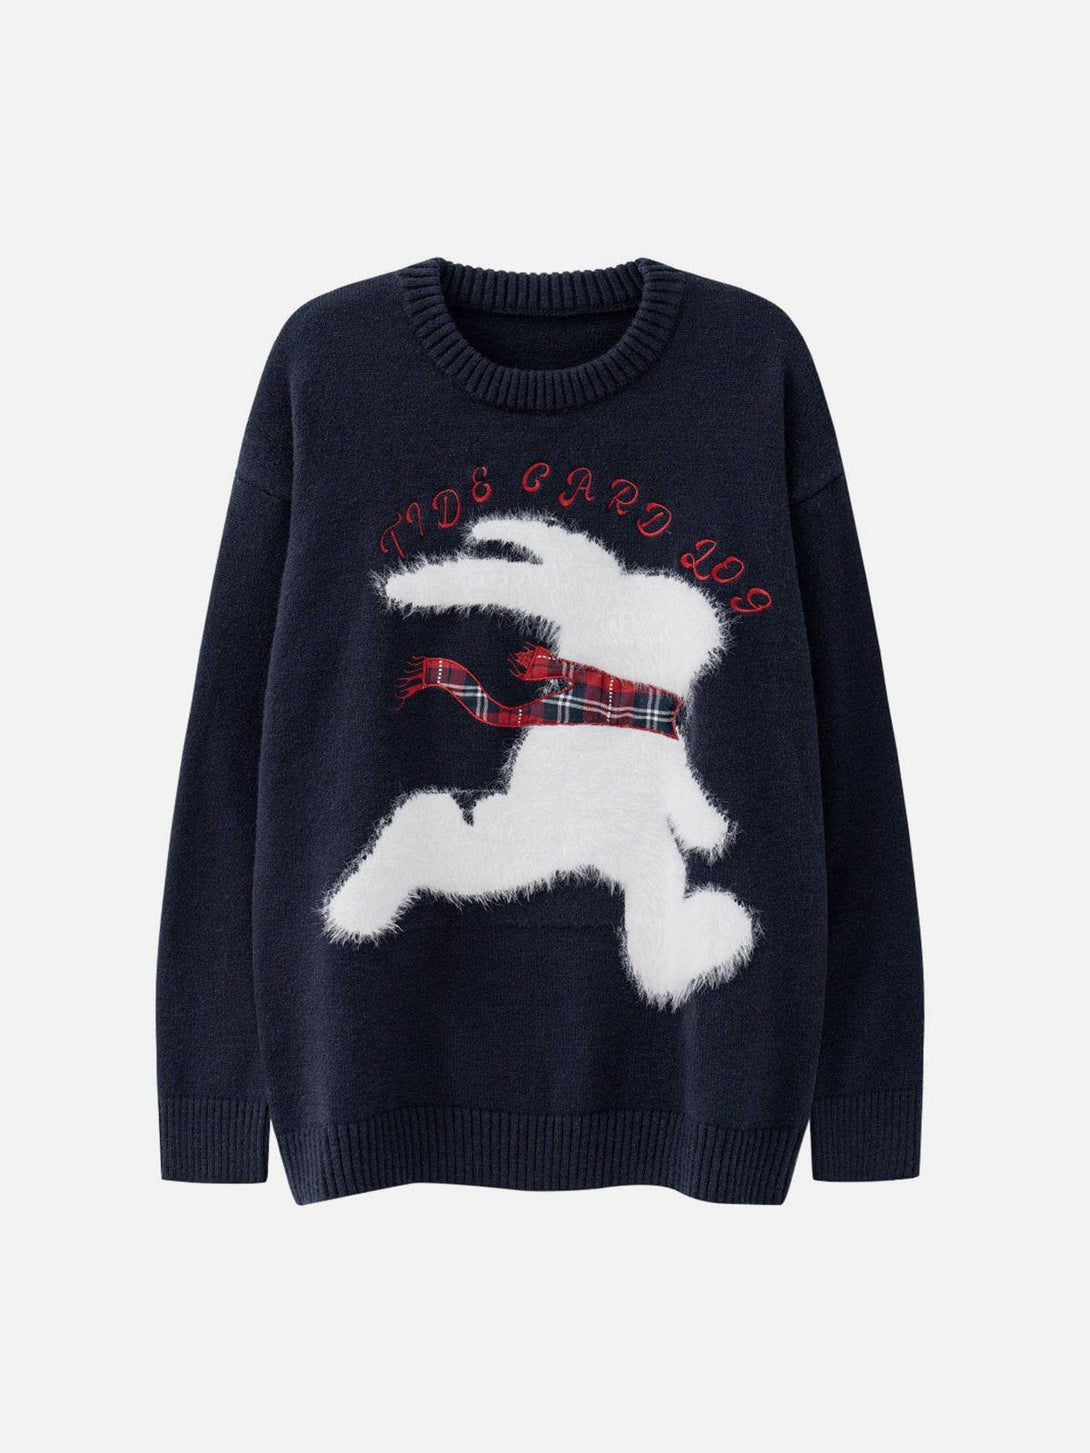 Majesda® - Scarf Cute Rabbit Sweater outfit ideas streetwear fashion